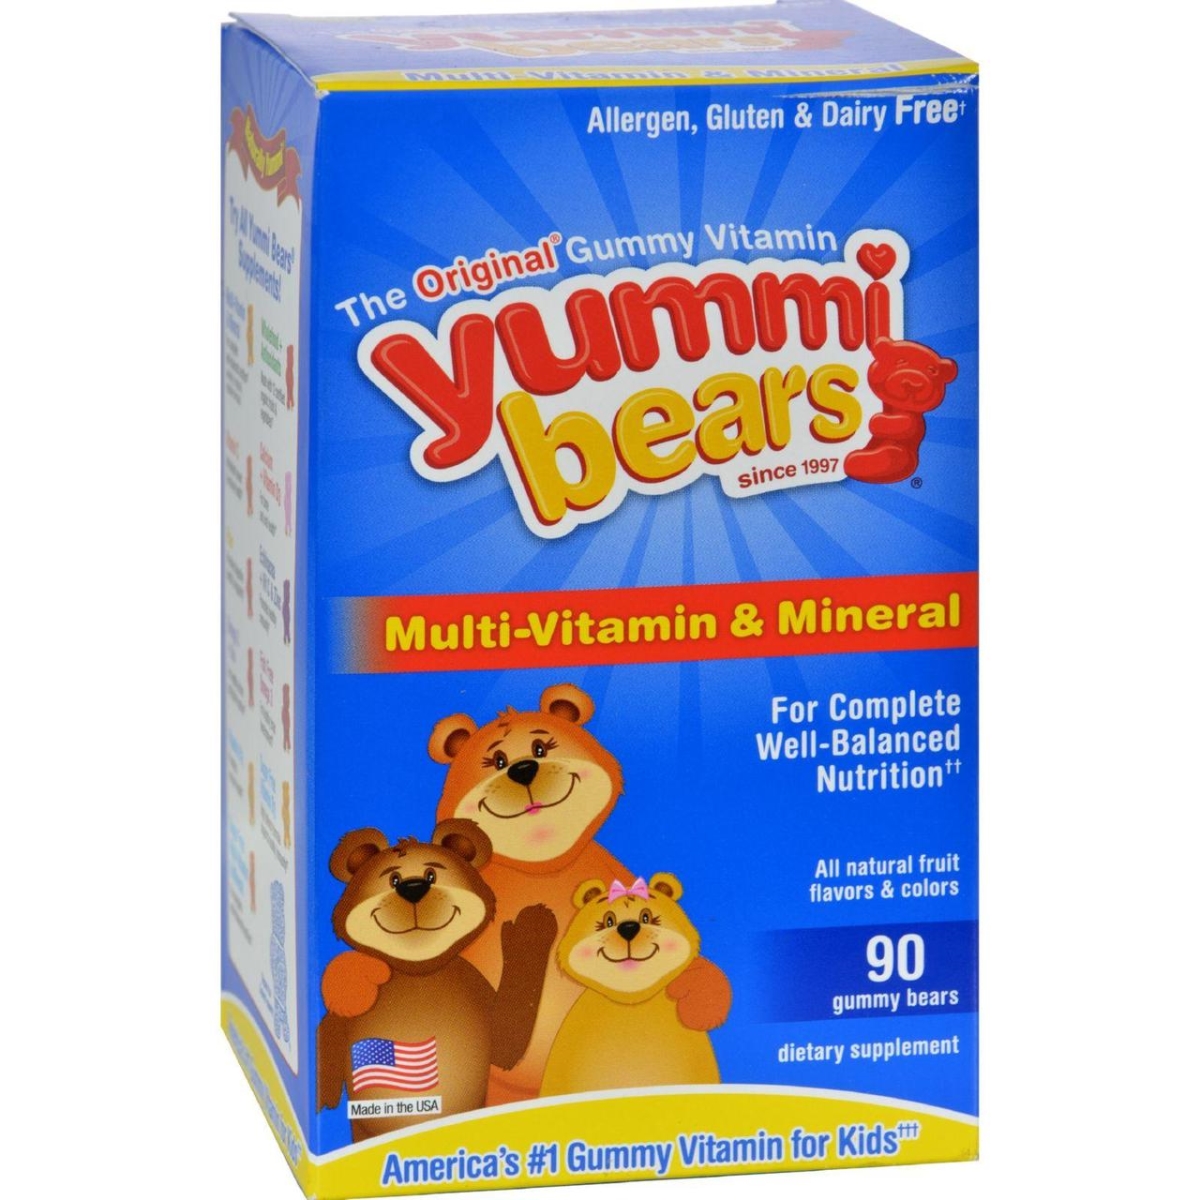 Hg0394213 Yummi Bears Multi-vitamin & Mineral Fruit, 90 Gummies